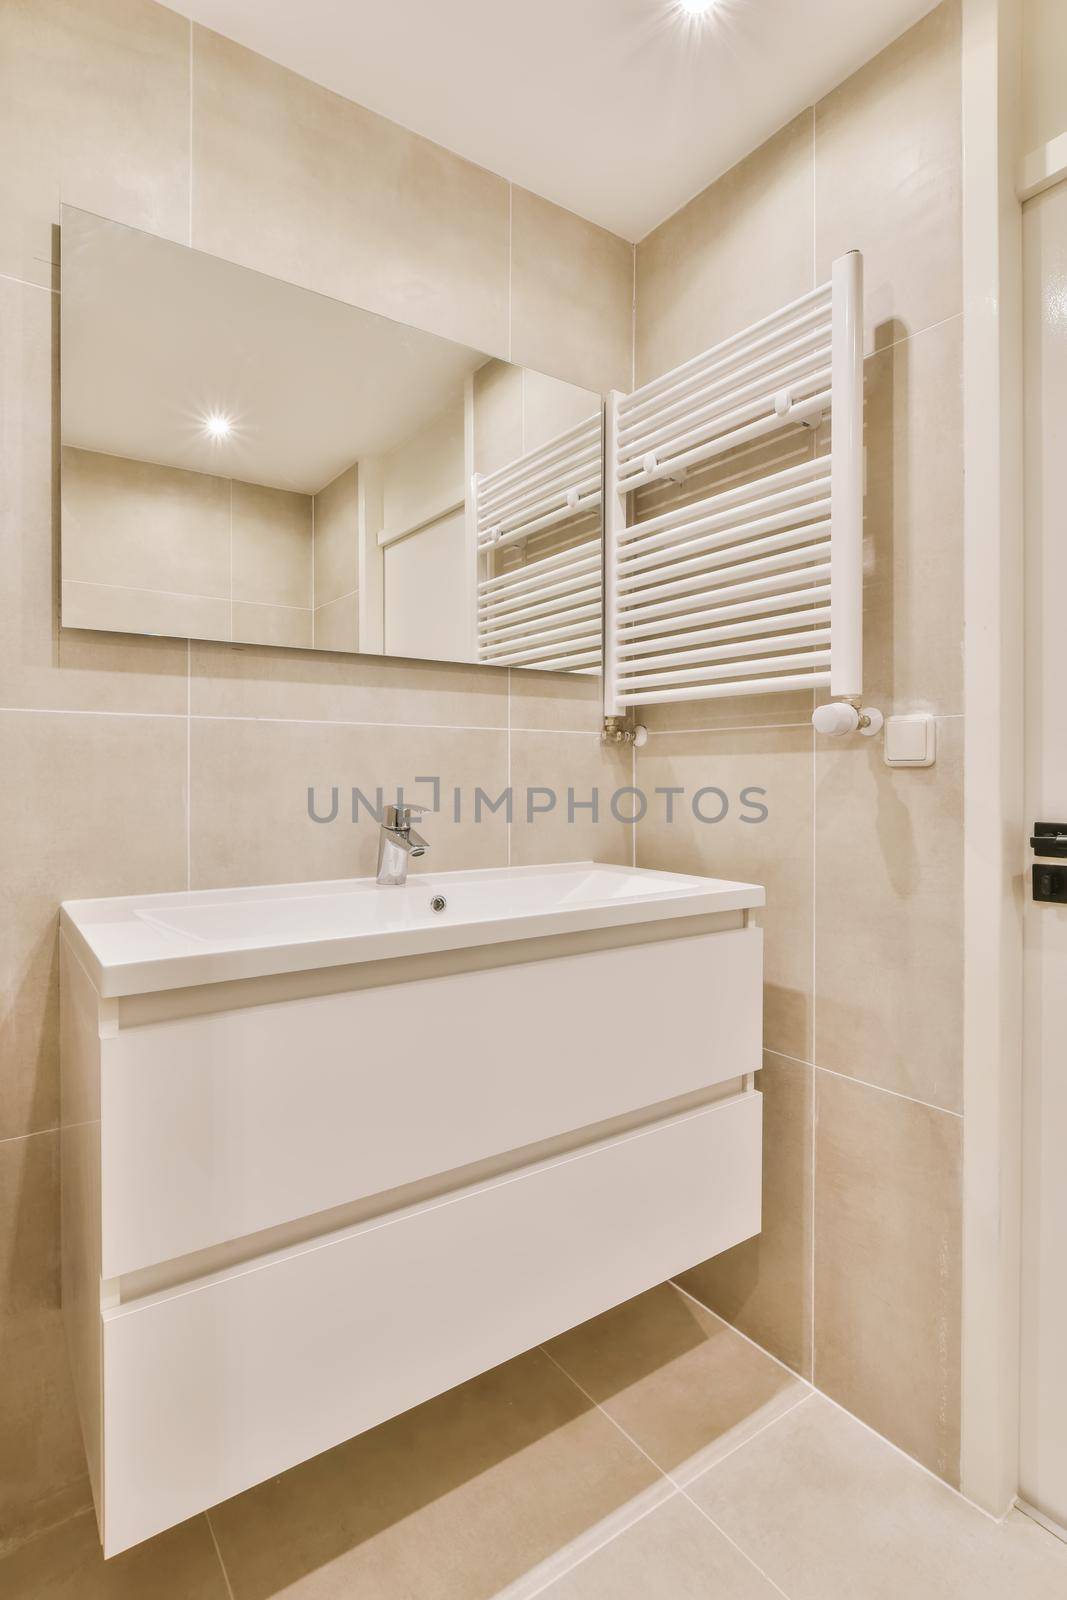 Beige bathroom design in a luxury apartment